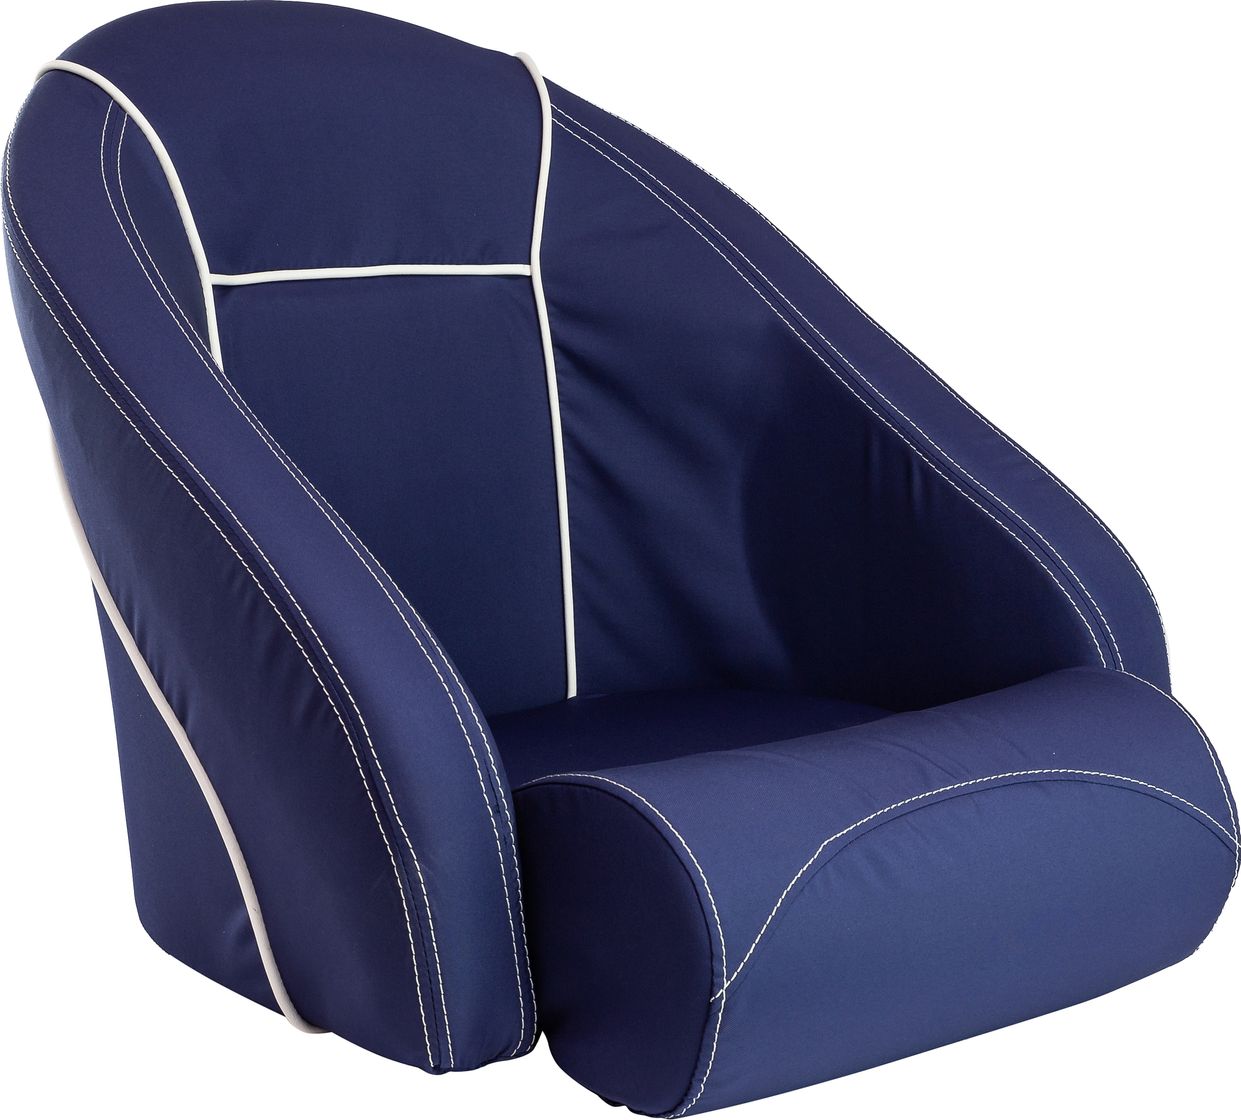 Кресло ROMEO мягкое, подставка, обивка ткань Markilux темно-синяя 118100395 кресло складное мягкое skipper обивка камуфляжная ткань 1061021